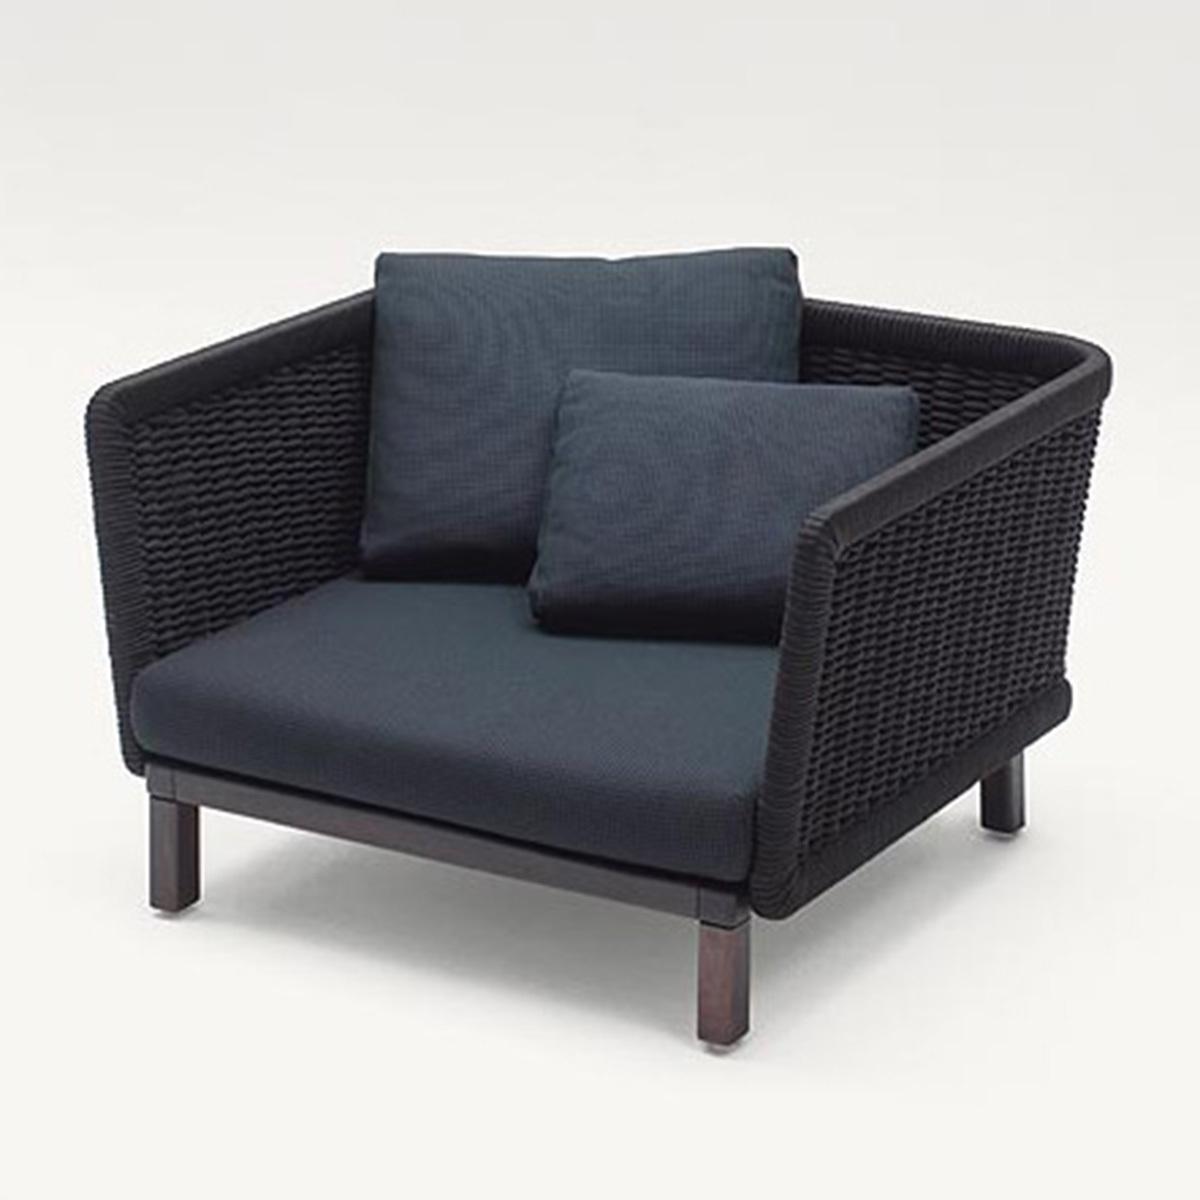 Product The Modern Garden Company | Sabi Lounge chair image